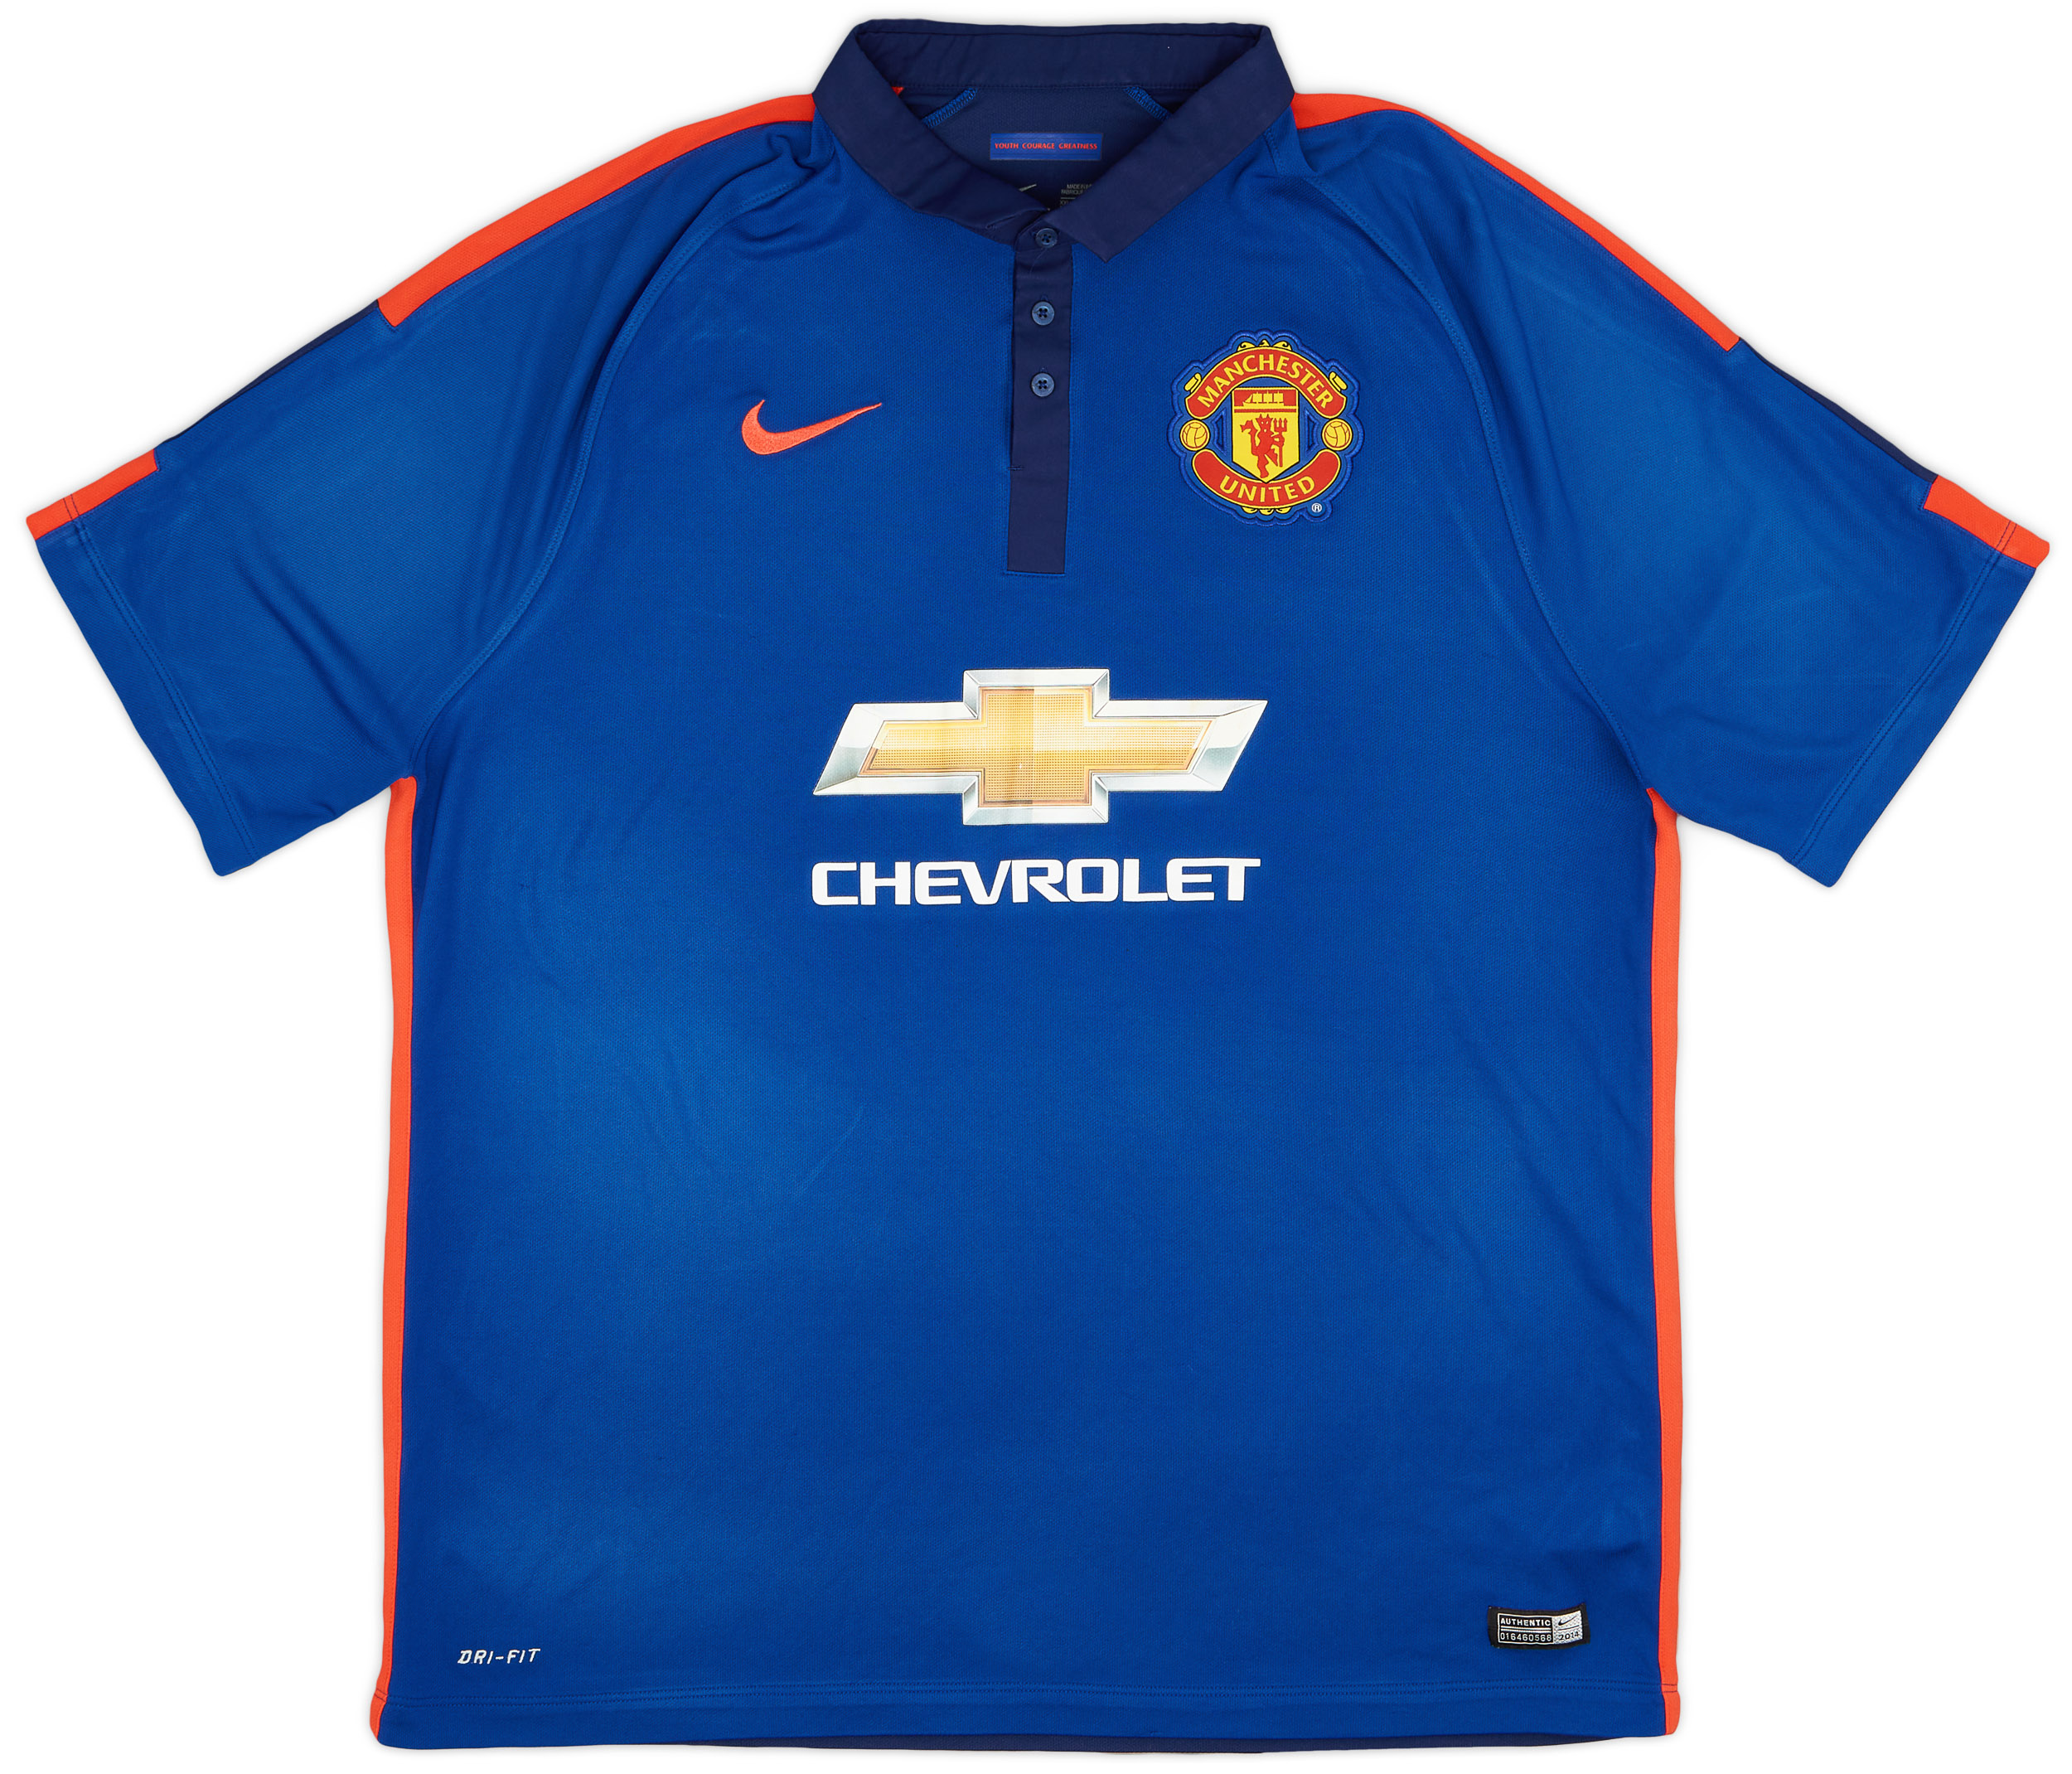 2014-15 Manchester United Third Shirt - 5/10 - ()